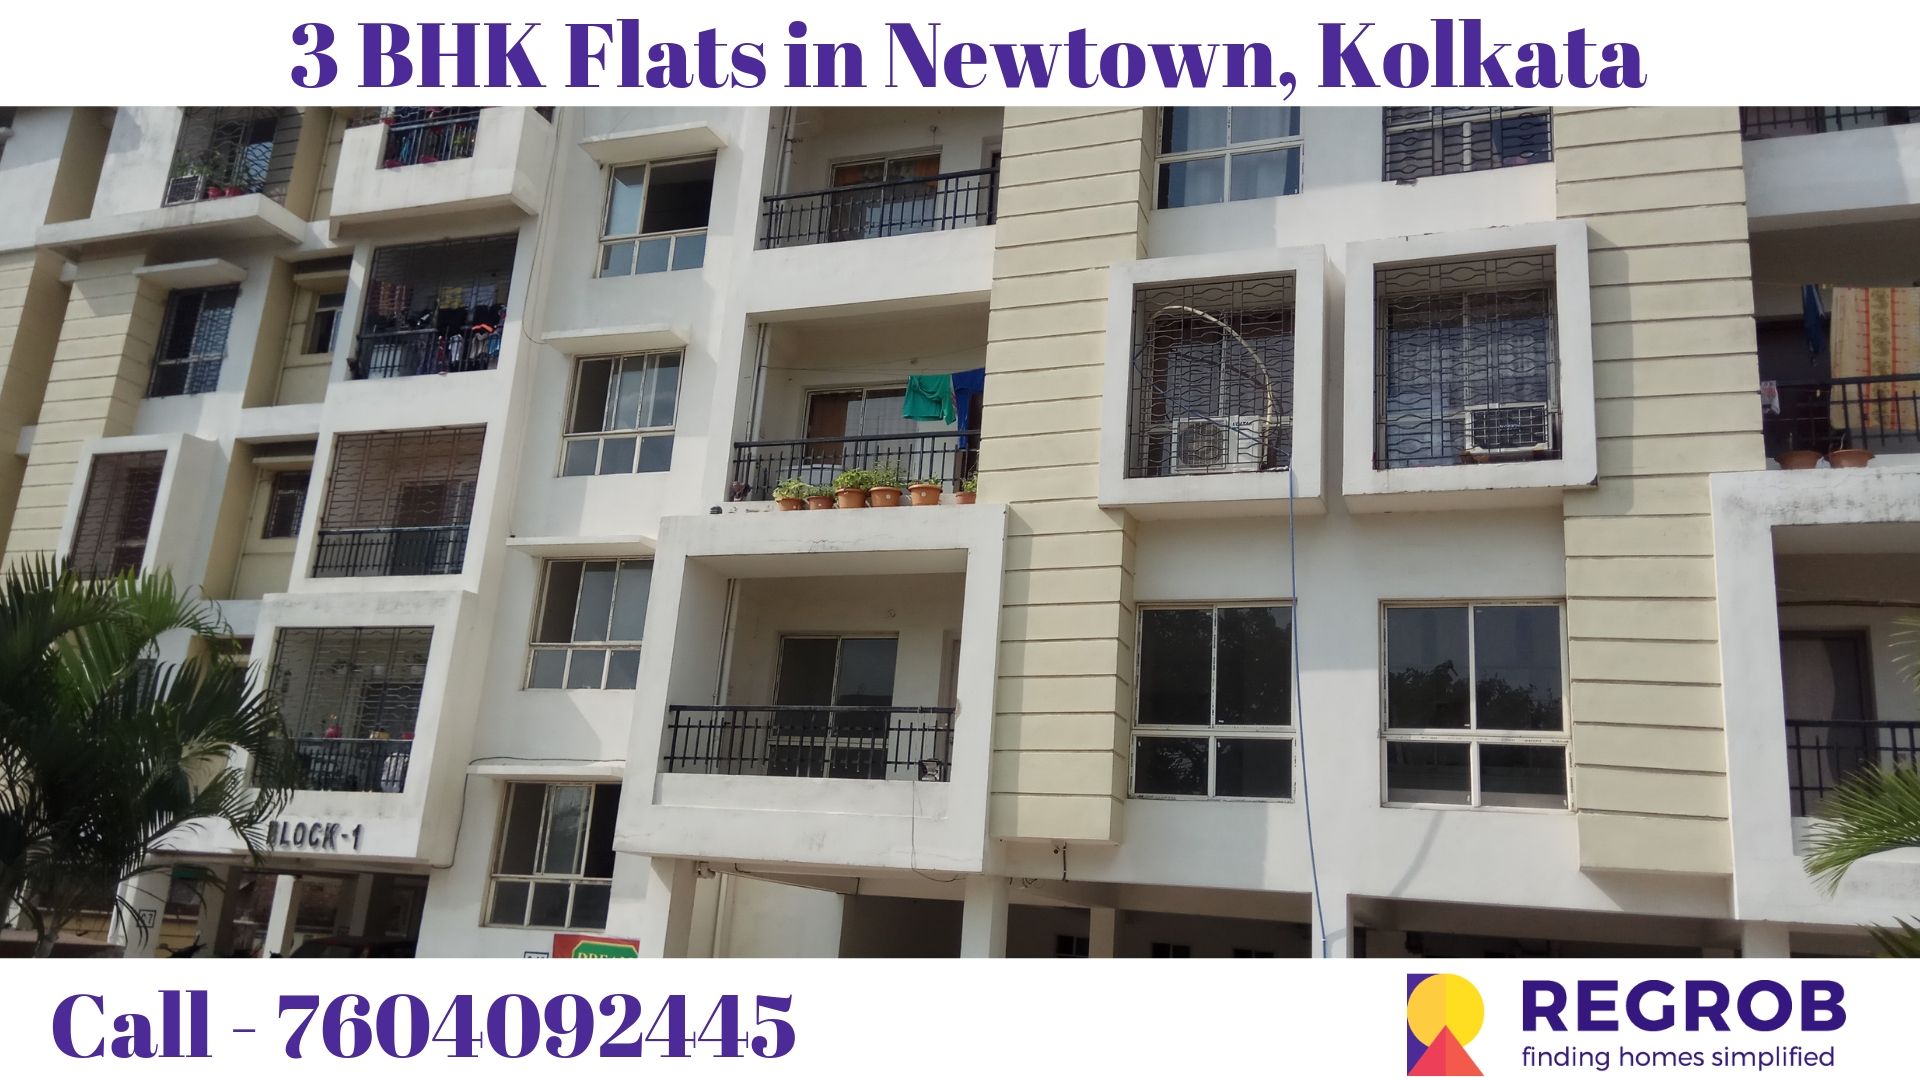 3 BHK Flats For Sale in Newtown Kolkata